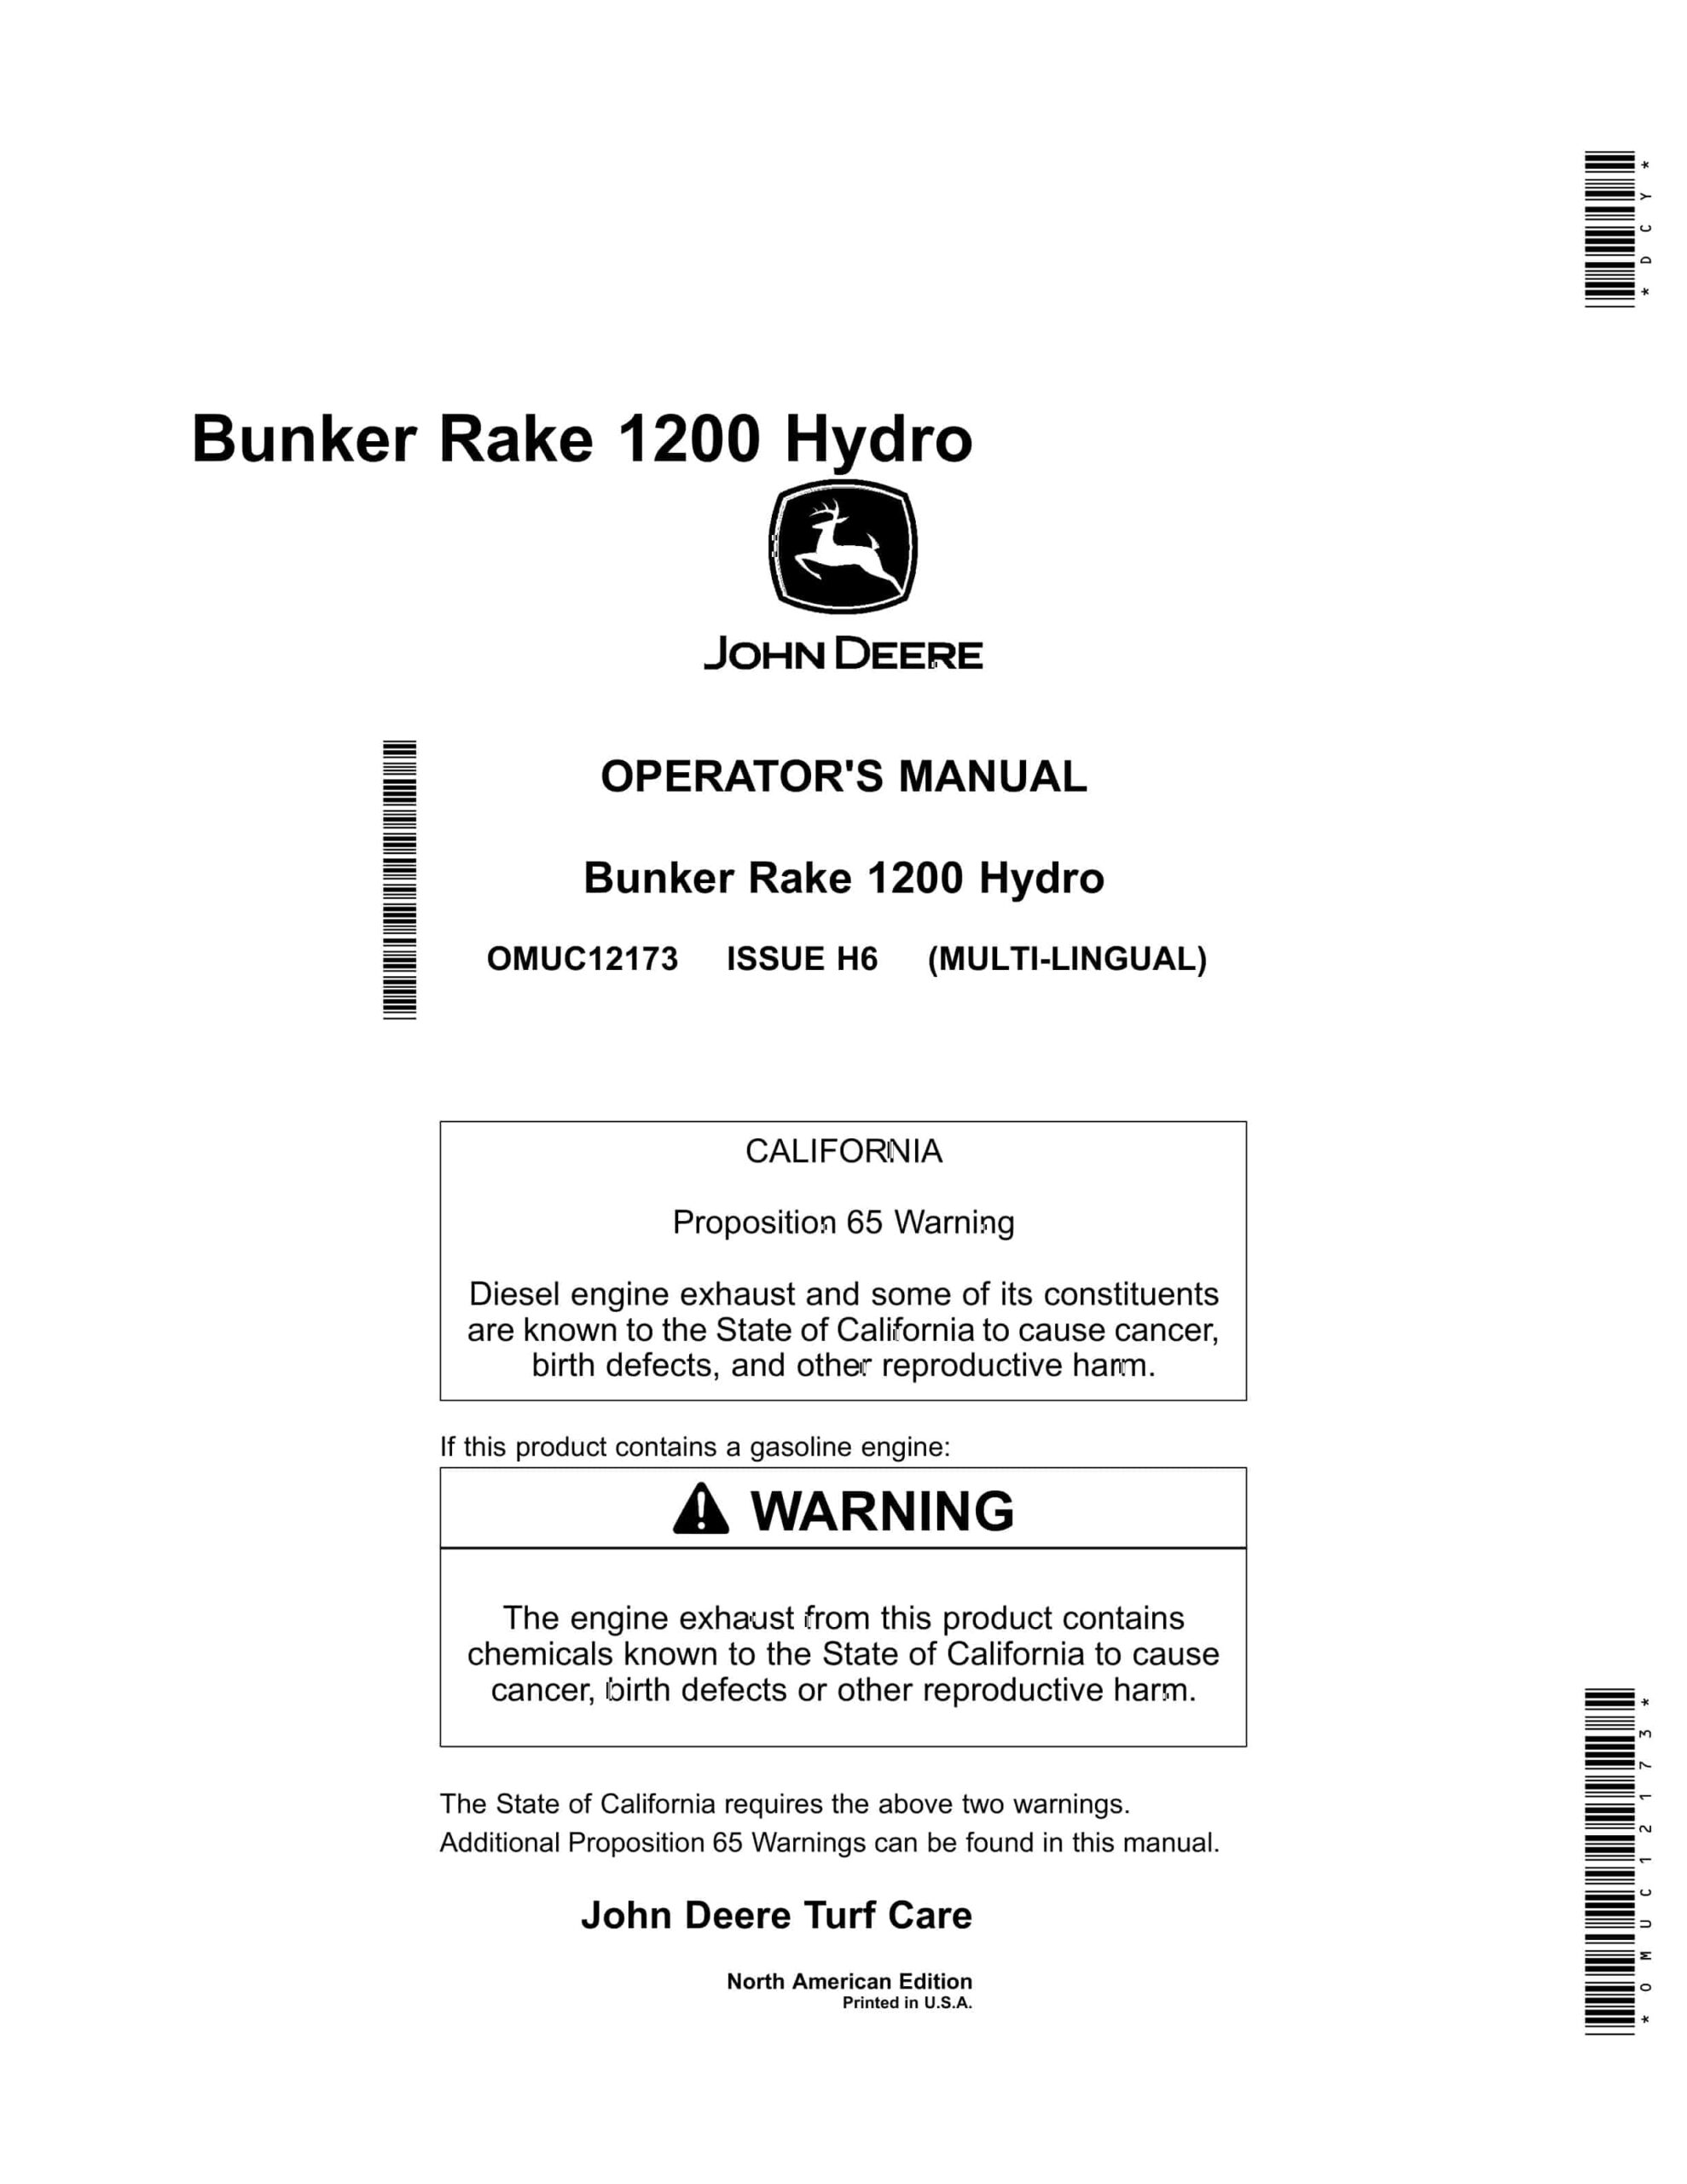 John Deere 1200 Hydro Bunker Rakes Operator Manual OMUC12173-1